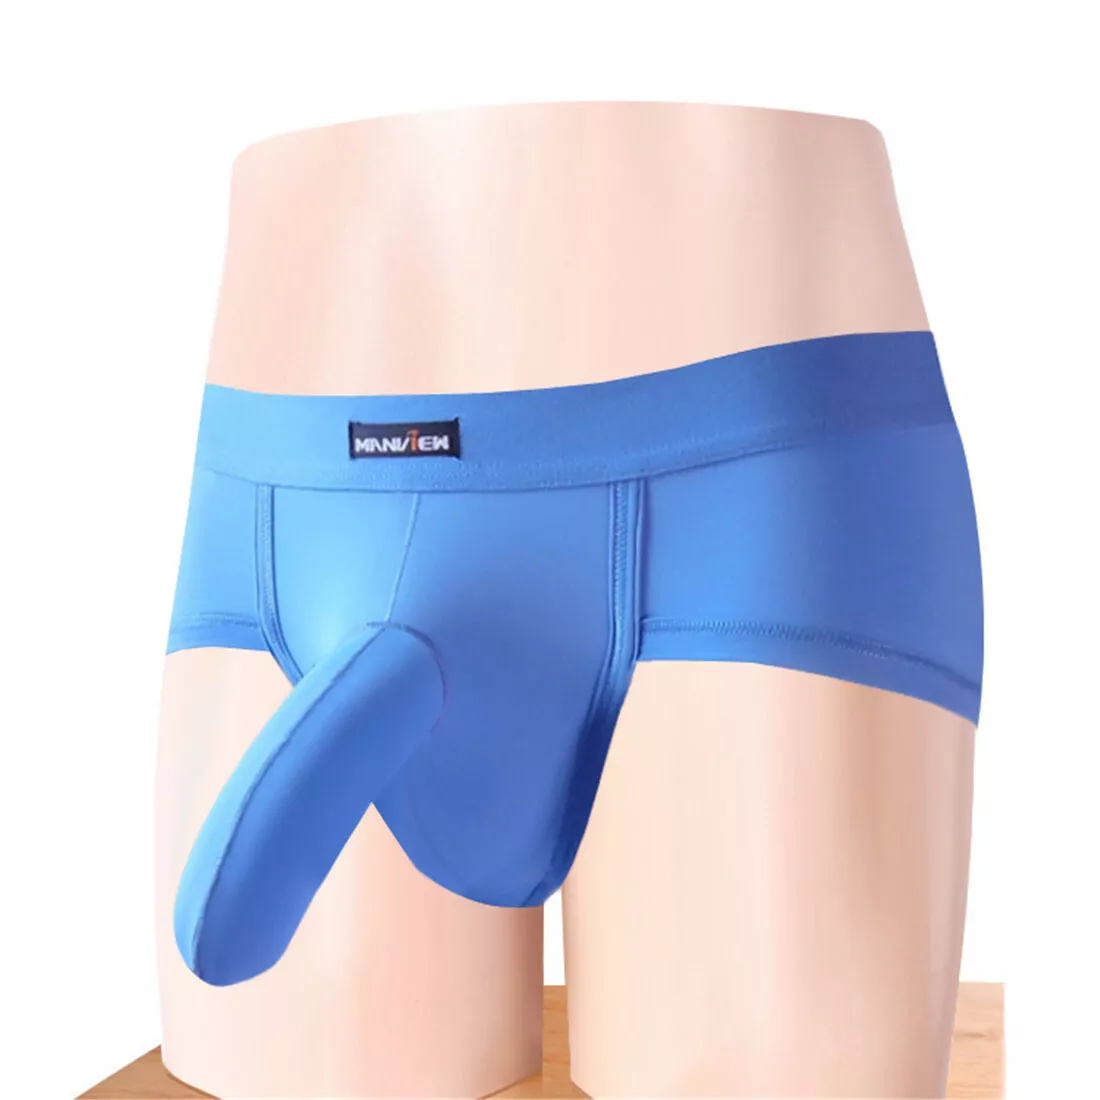 amy eckrich add penis in underwear photo